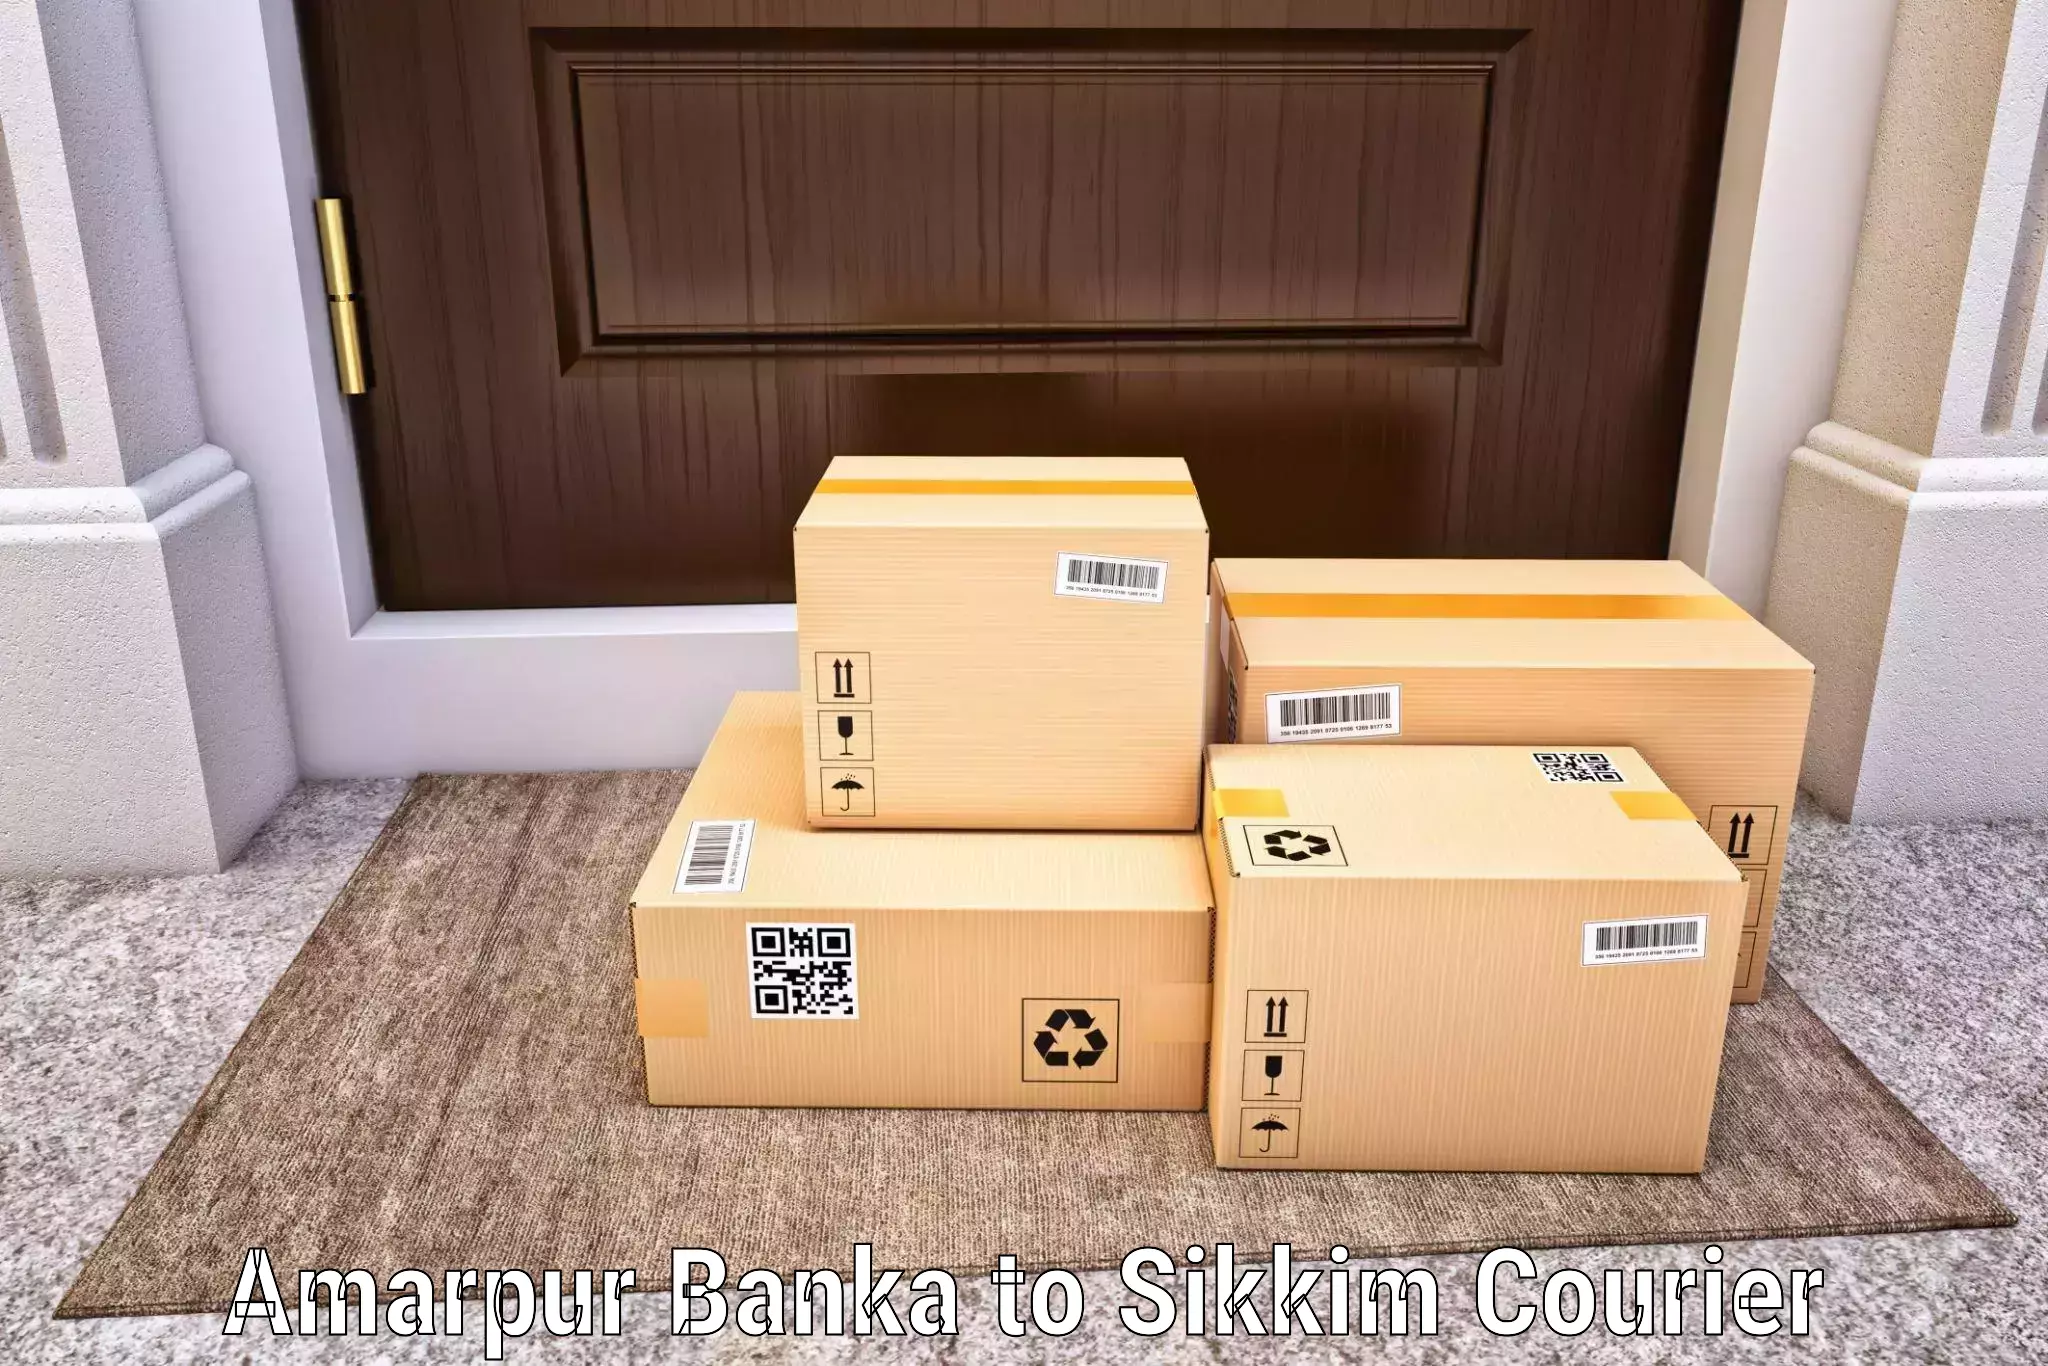 Courier service comparison Amarpur Banka to South Sikkim